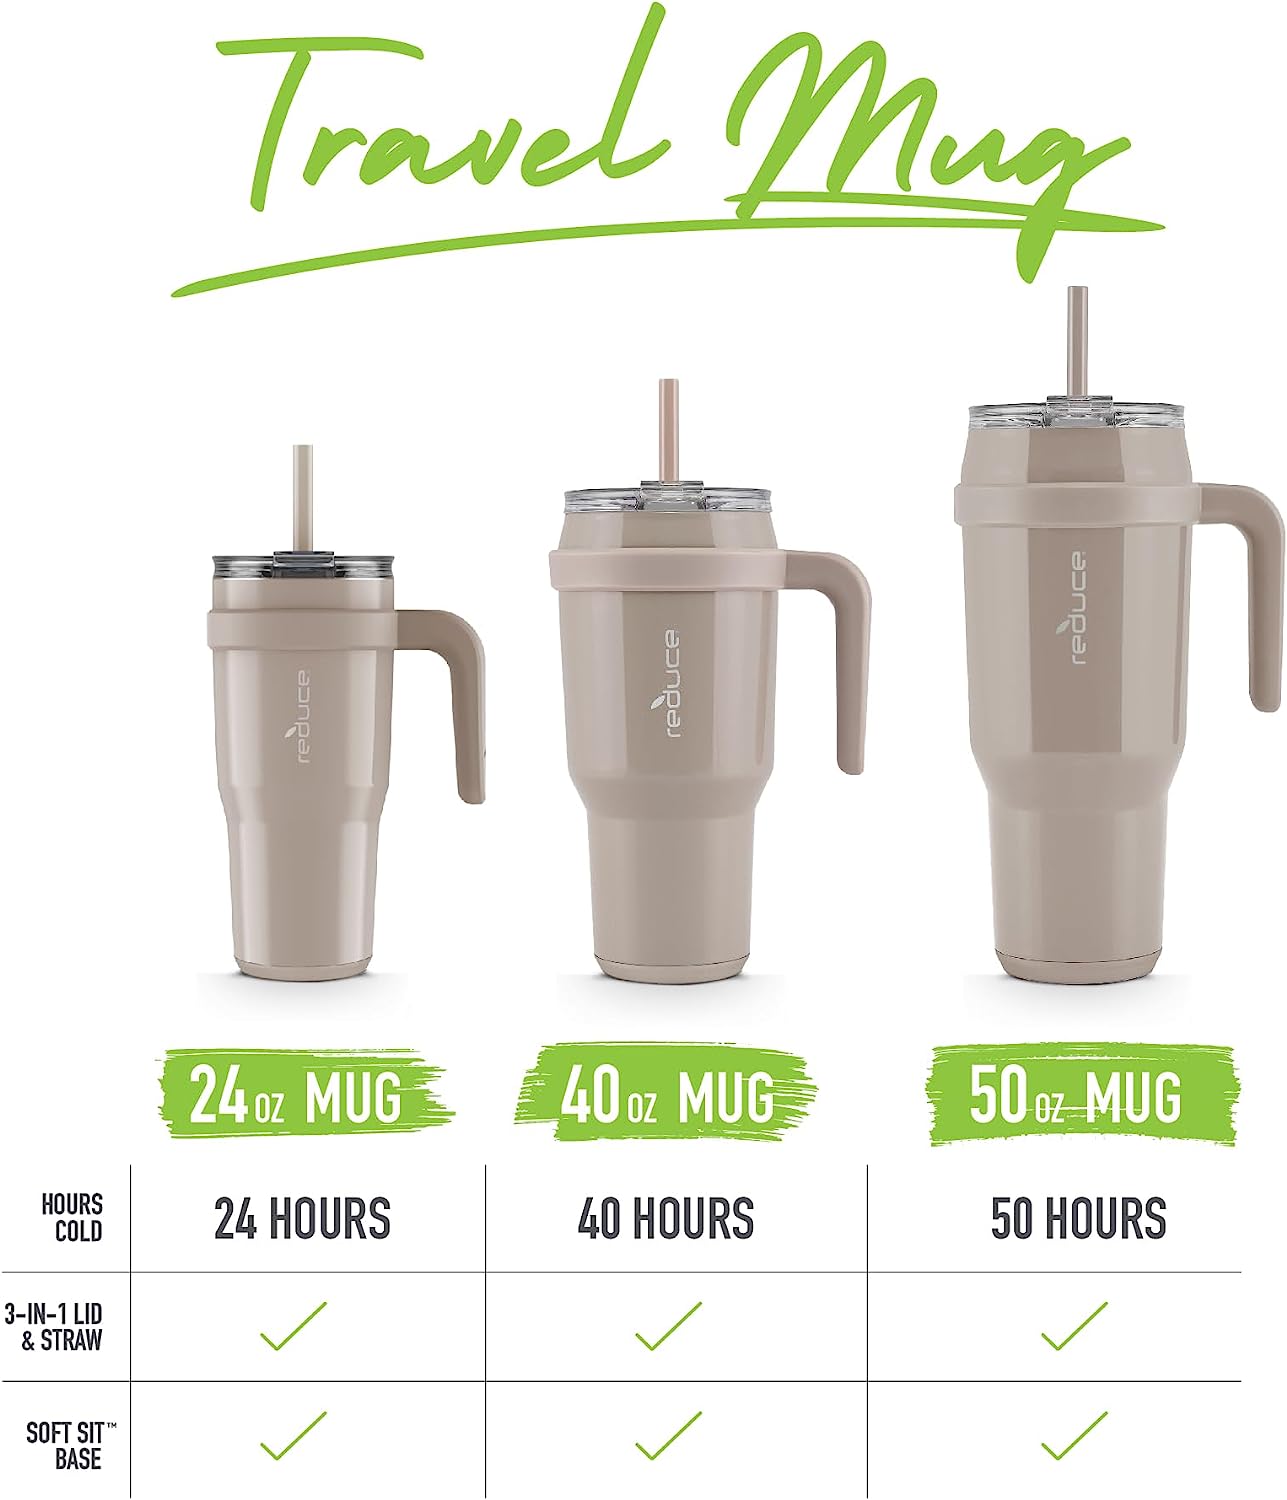 Reduce Cold1 Travel Mug - Sand - 50 oz